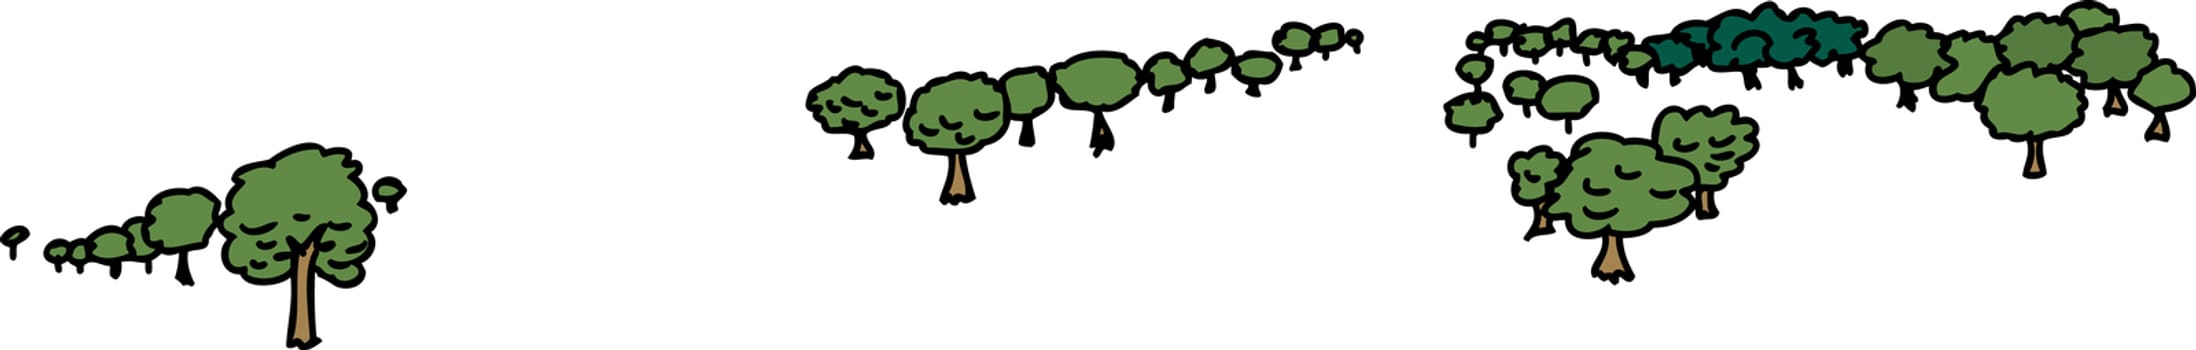 Set of various hand drawn cartoon trees